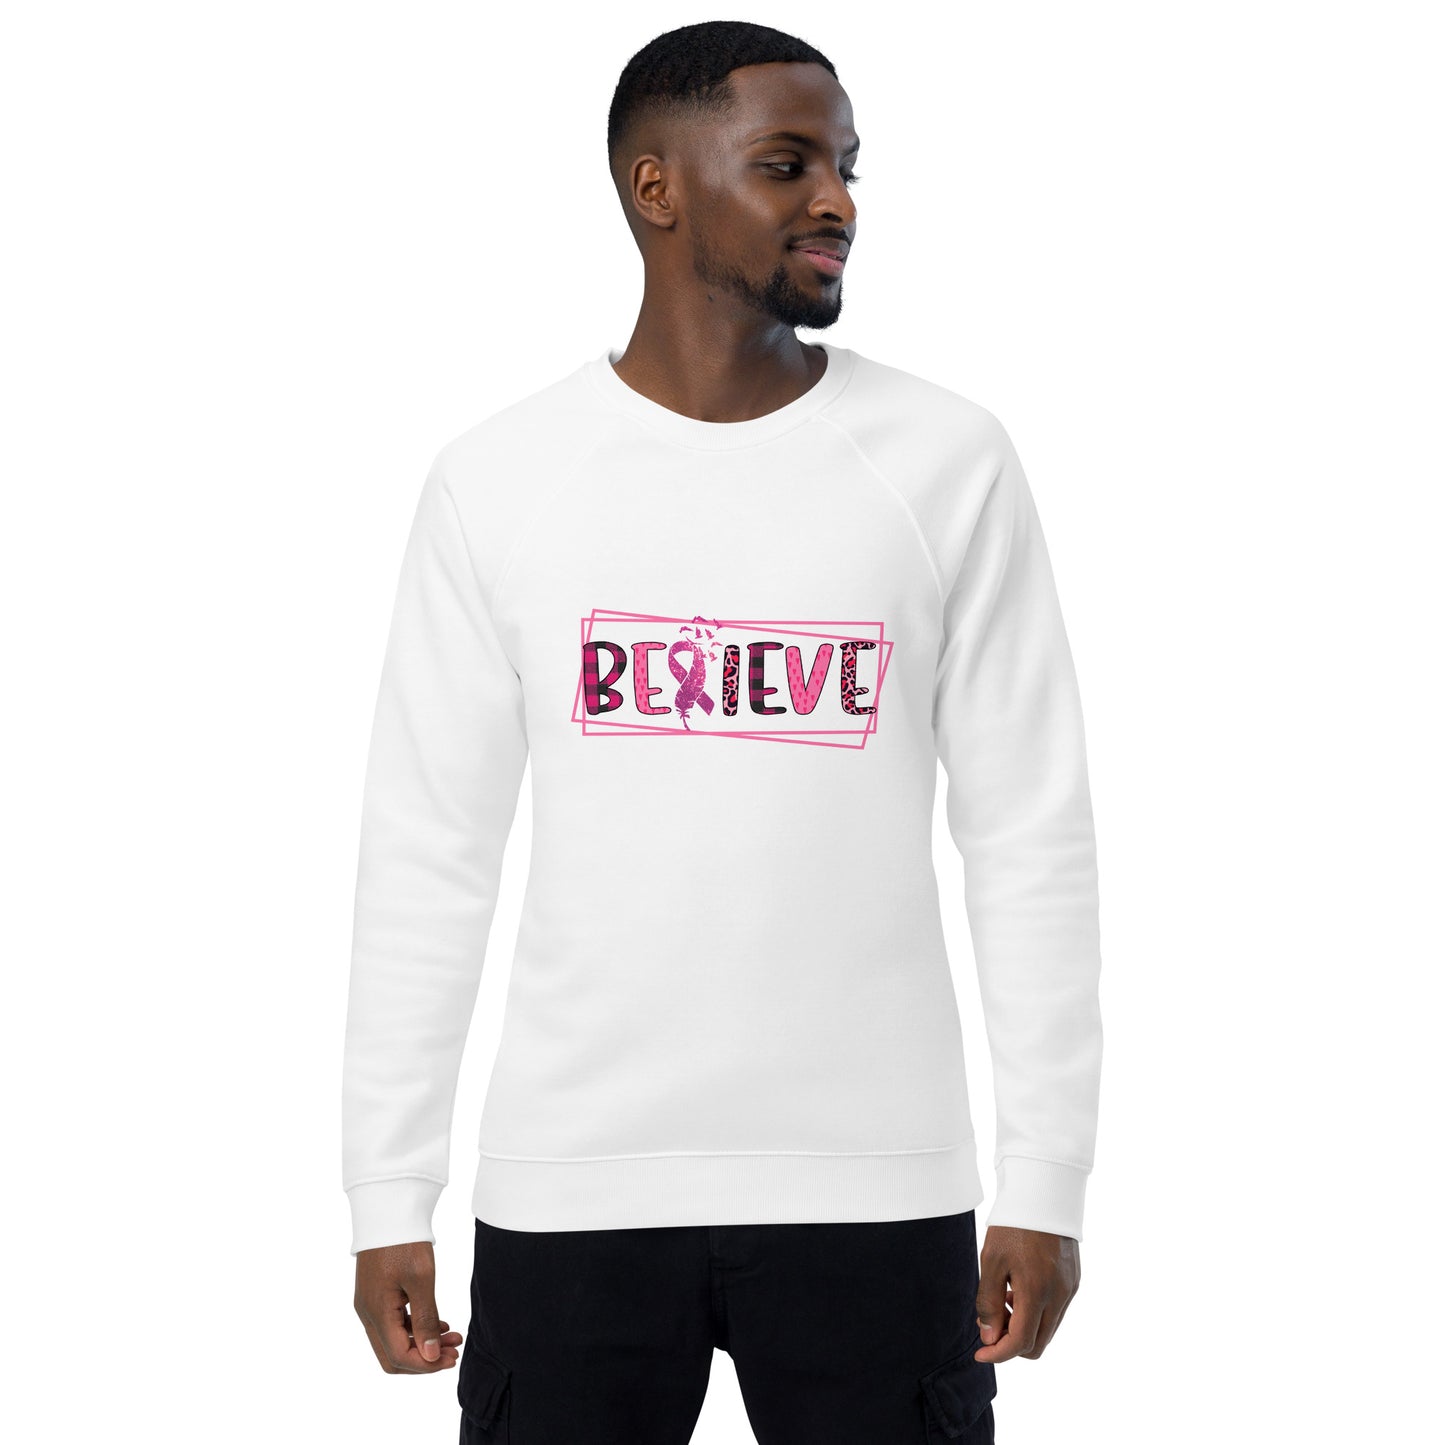 Unisex Organic Sweatshirt/Believe-Cancer-Motivation